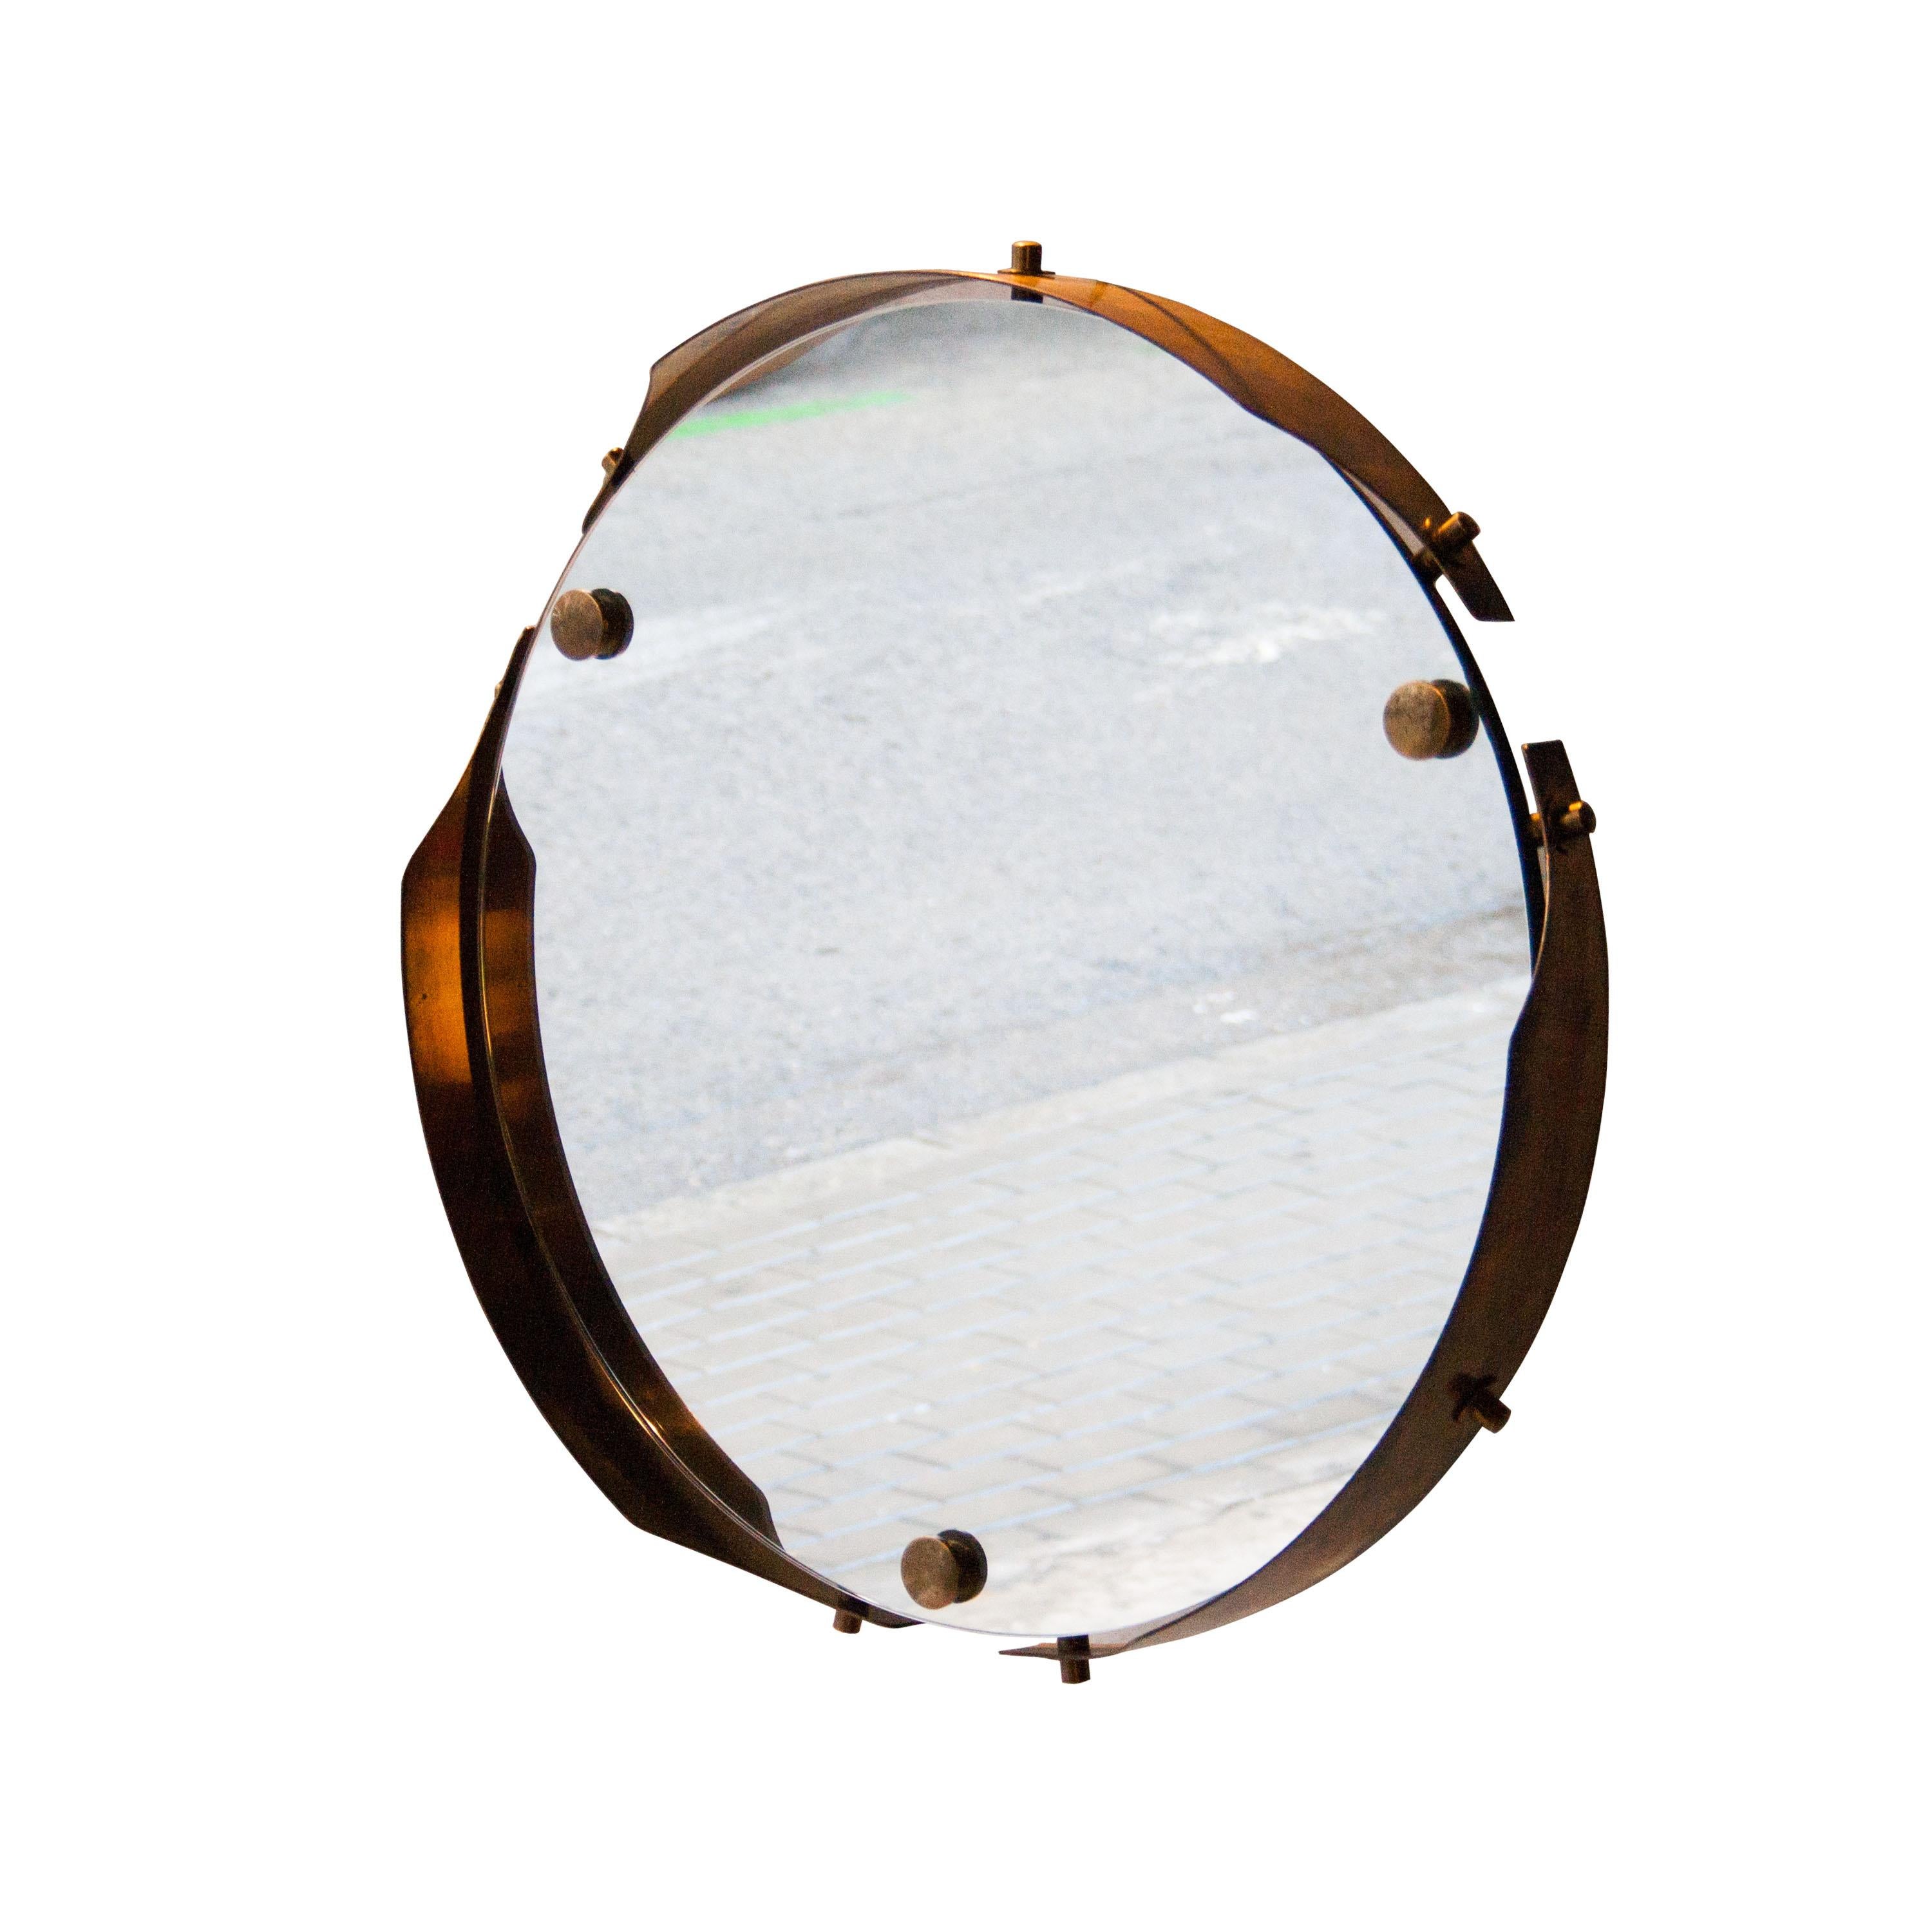 Midcentury Italian round mirror with brass structure.